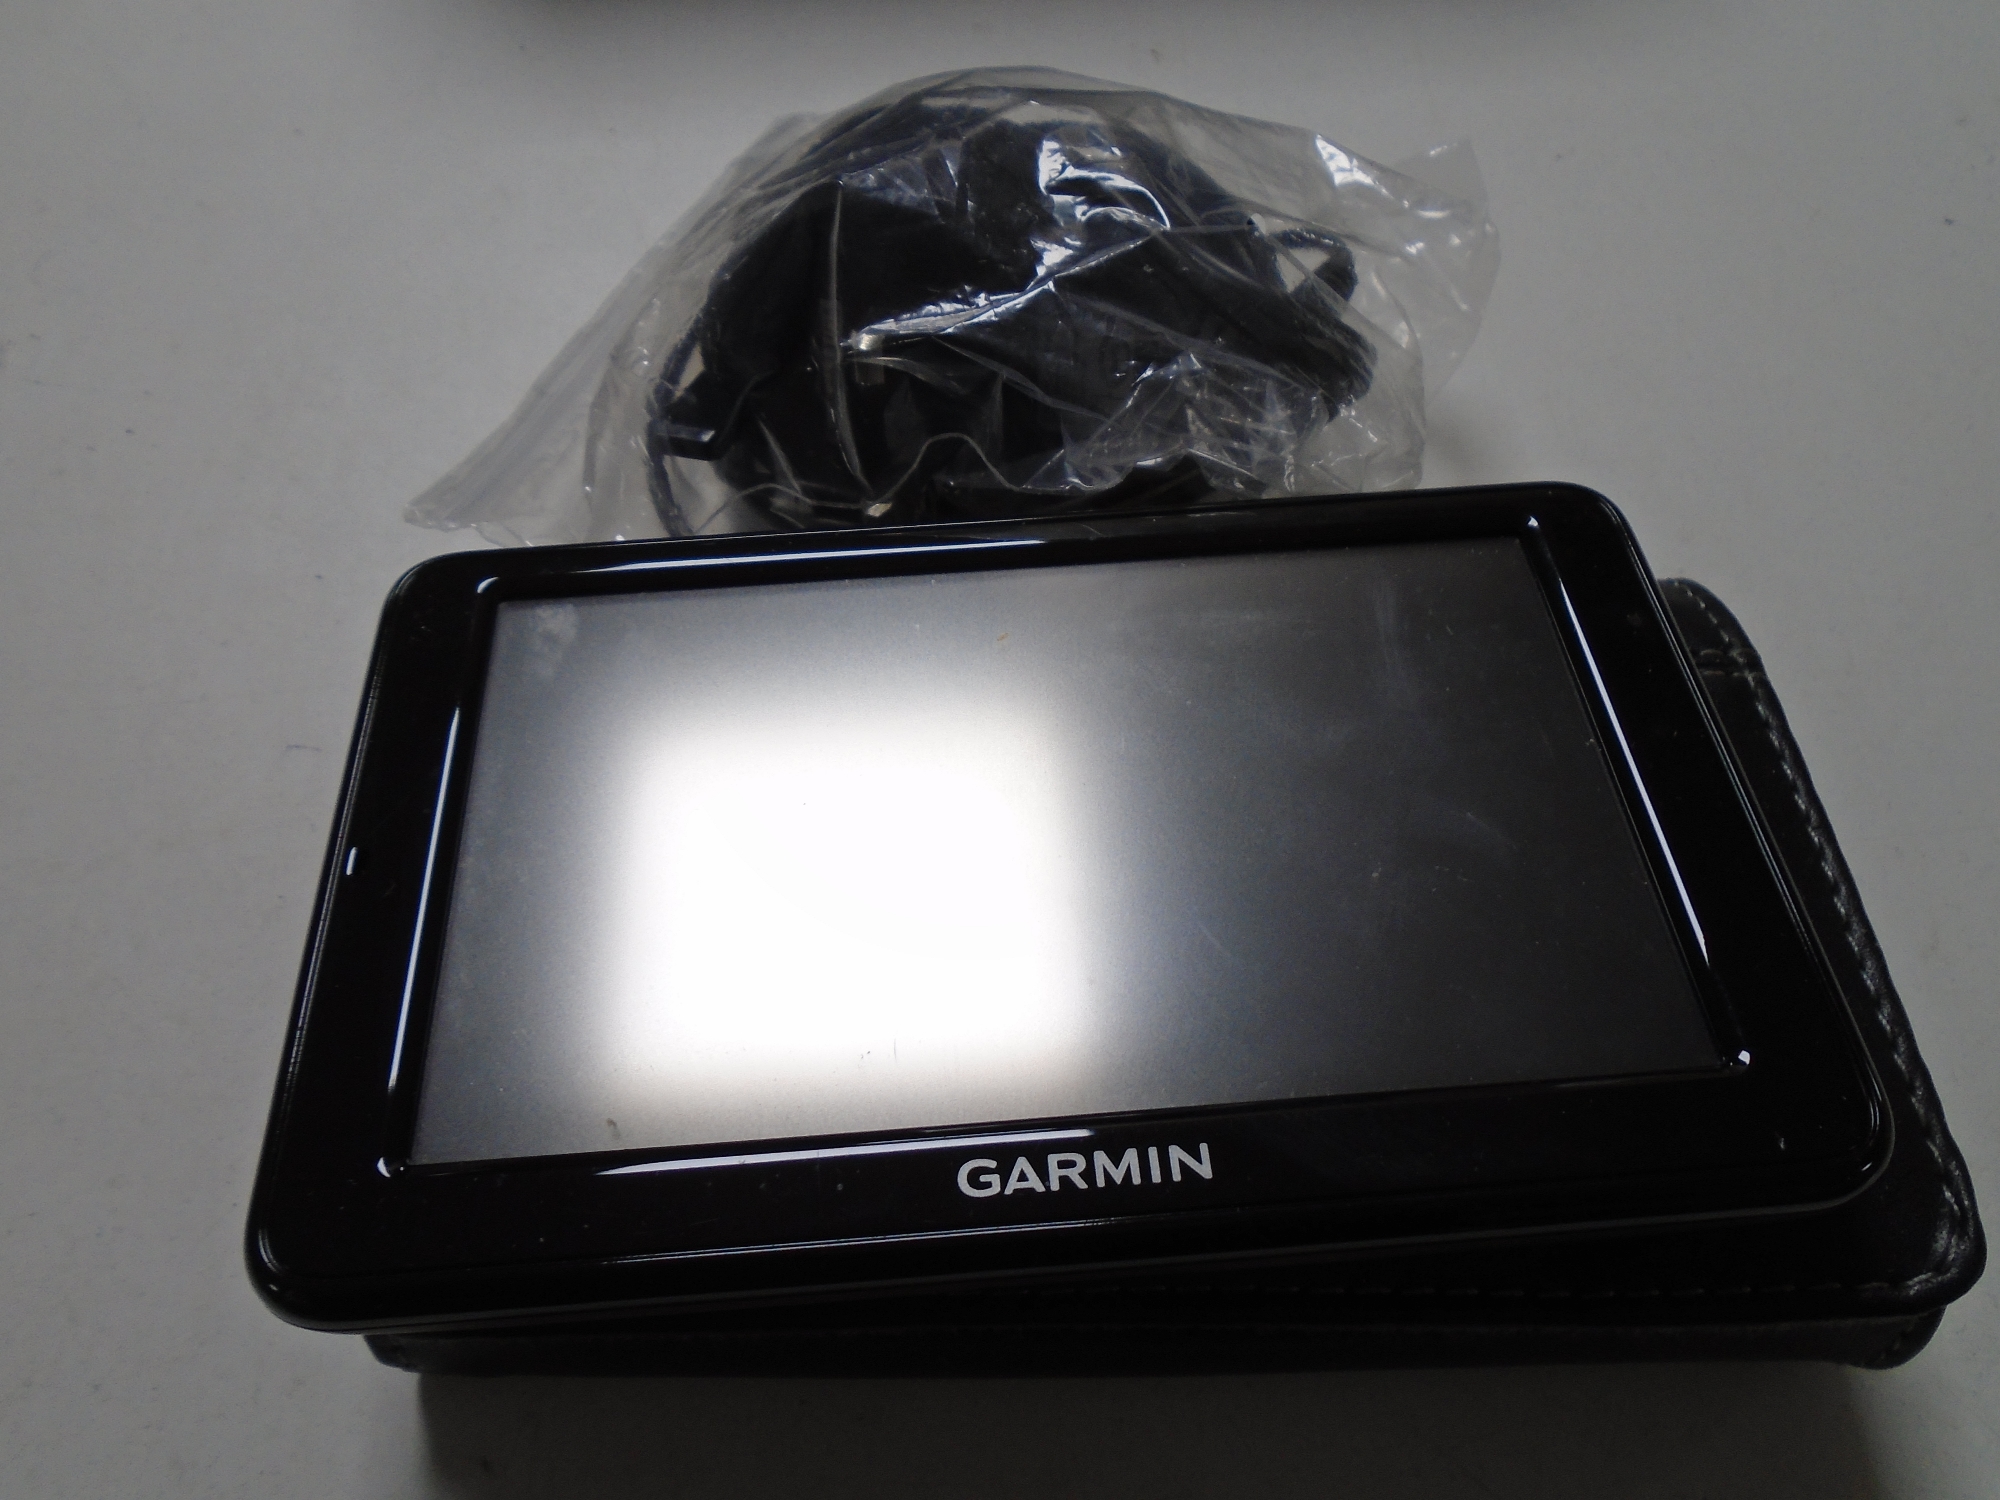 A box containing HP laptop, Garmin sat nav, Draper cordless screwdriver kit (new), - Image 2 of 2